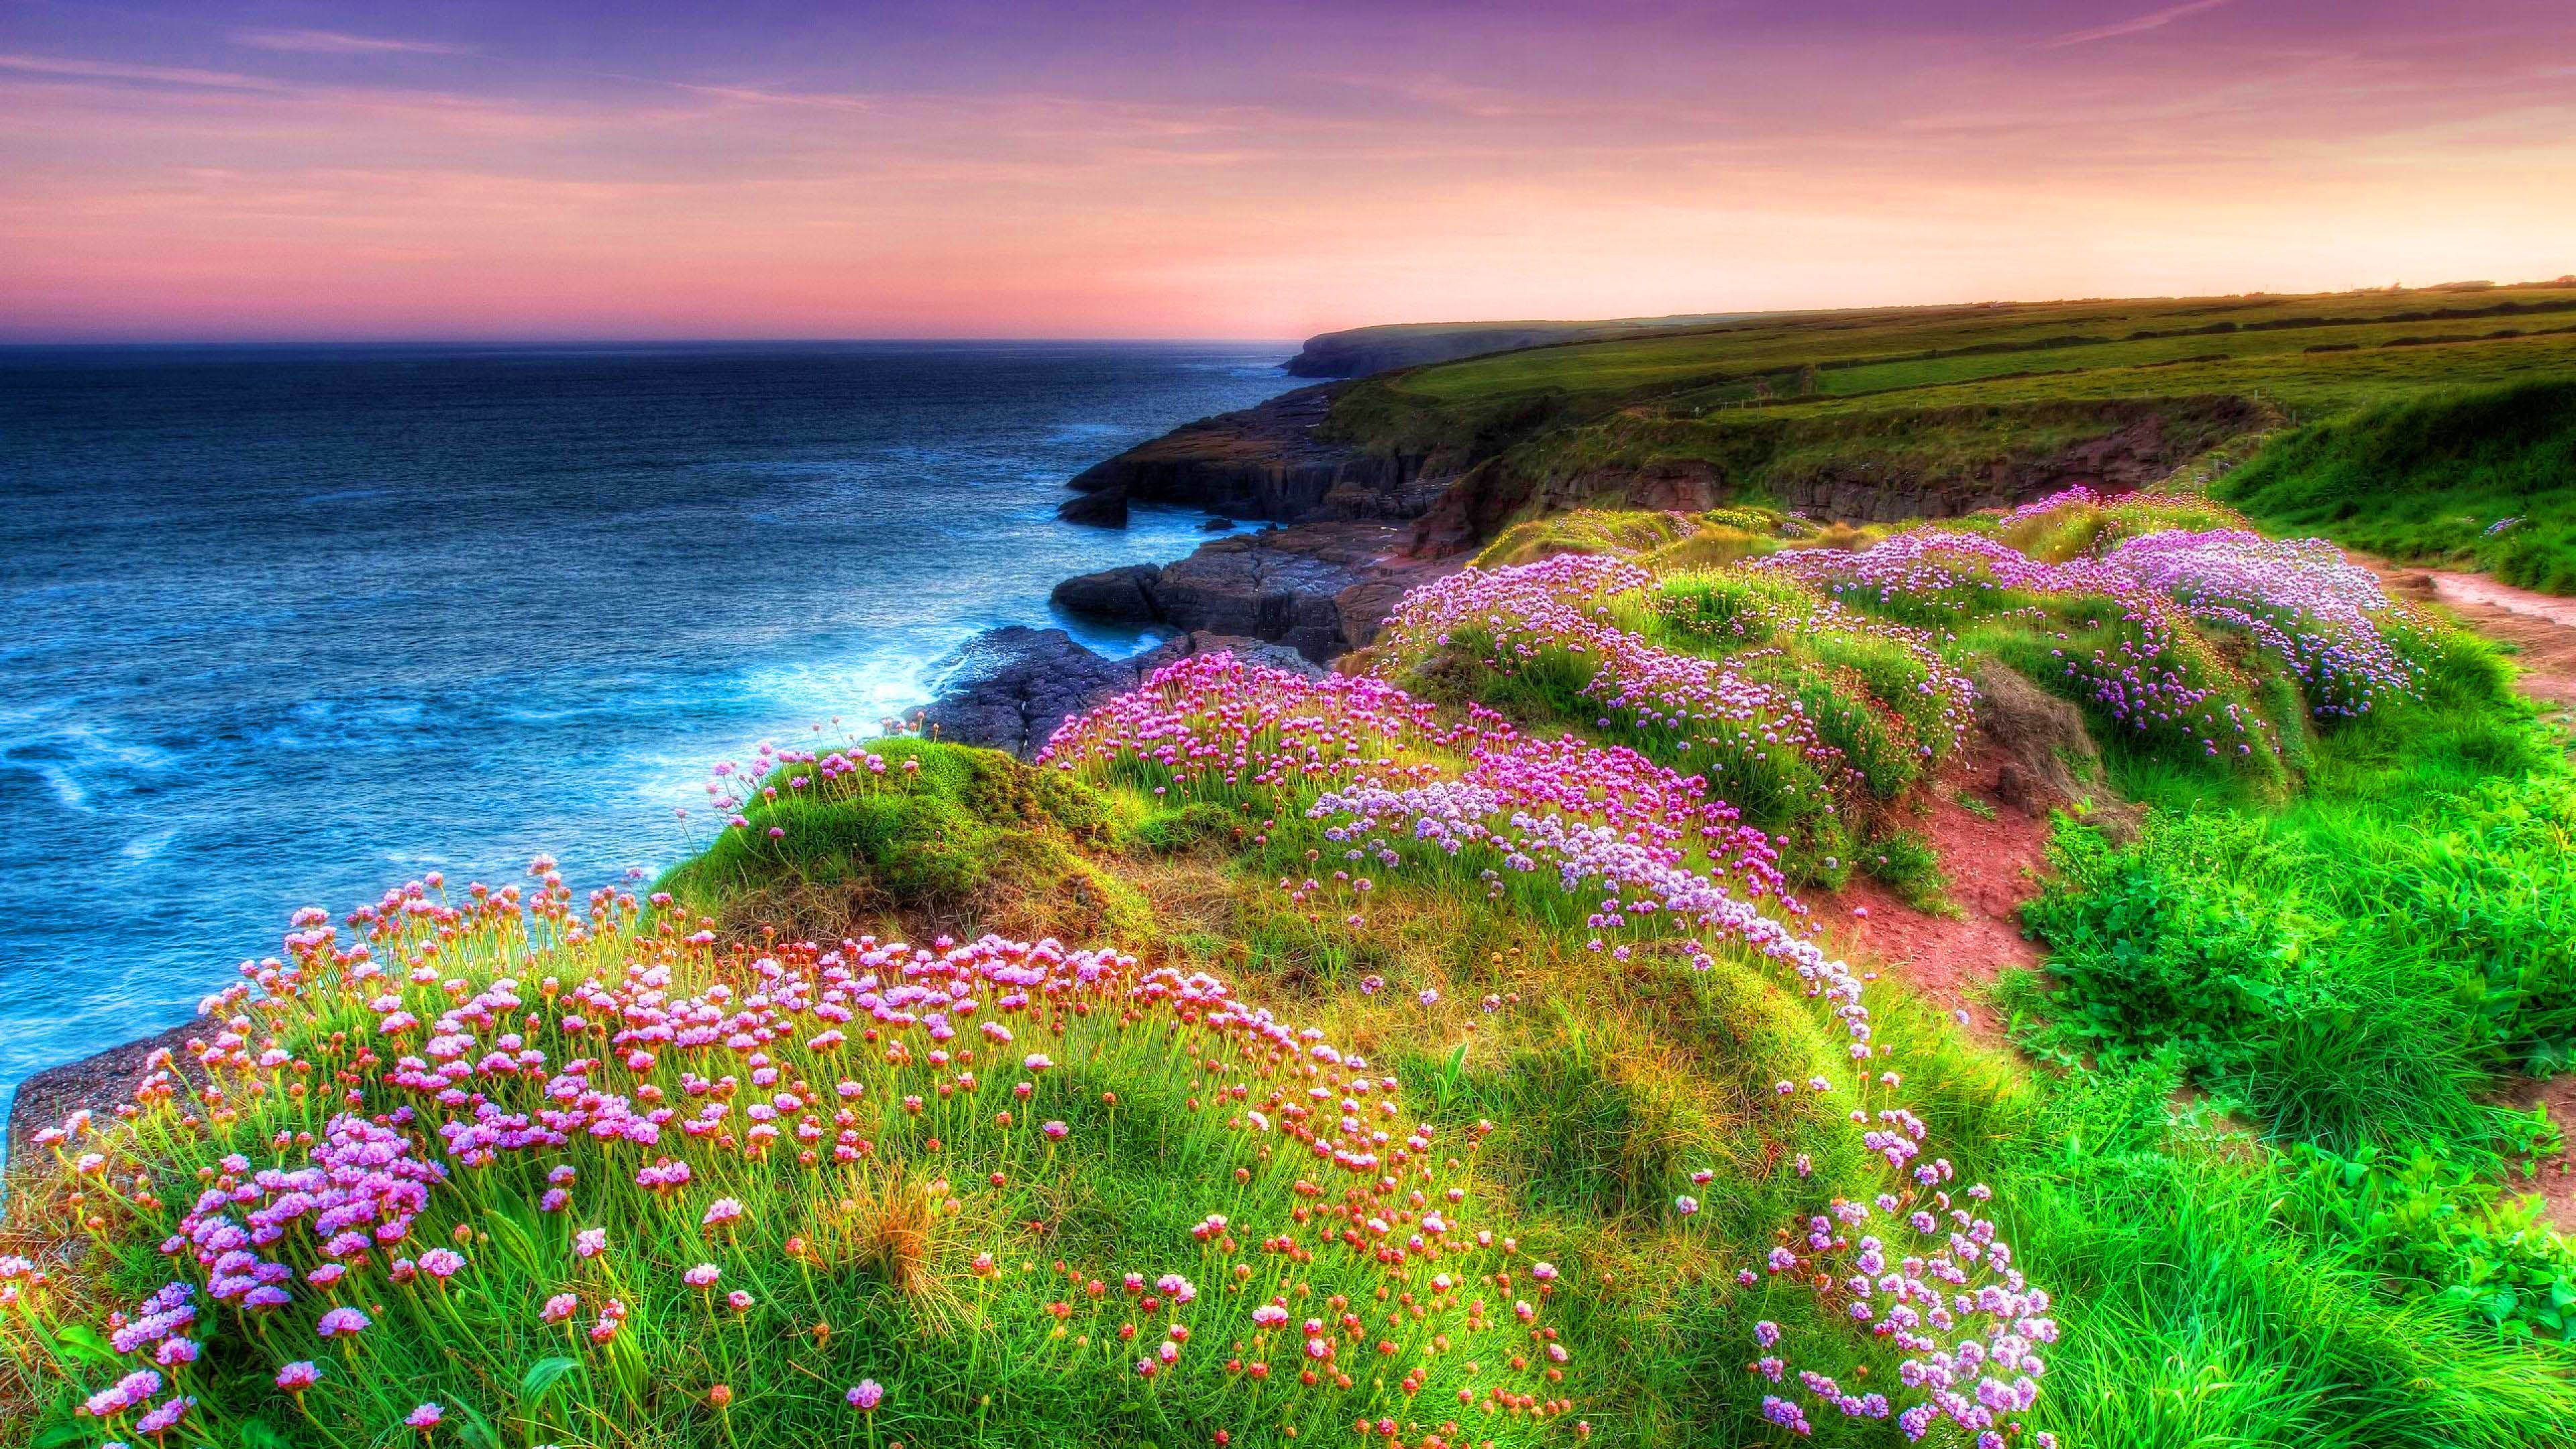 Landscape Ocean Shore Sea Green Grass, Spring Flowers Dunmore East